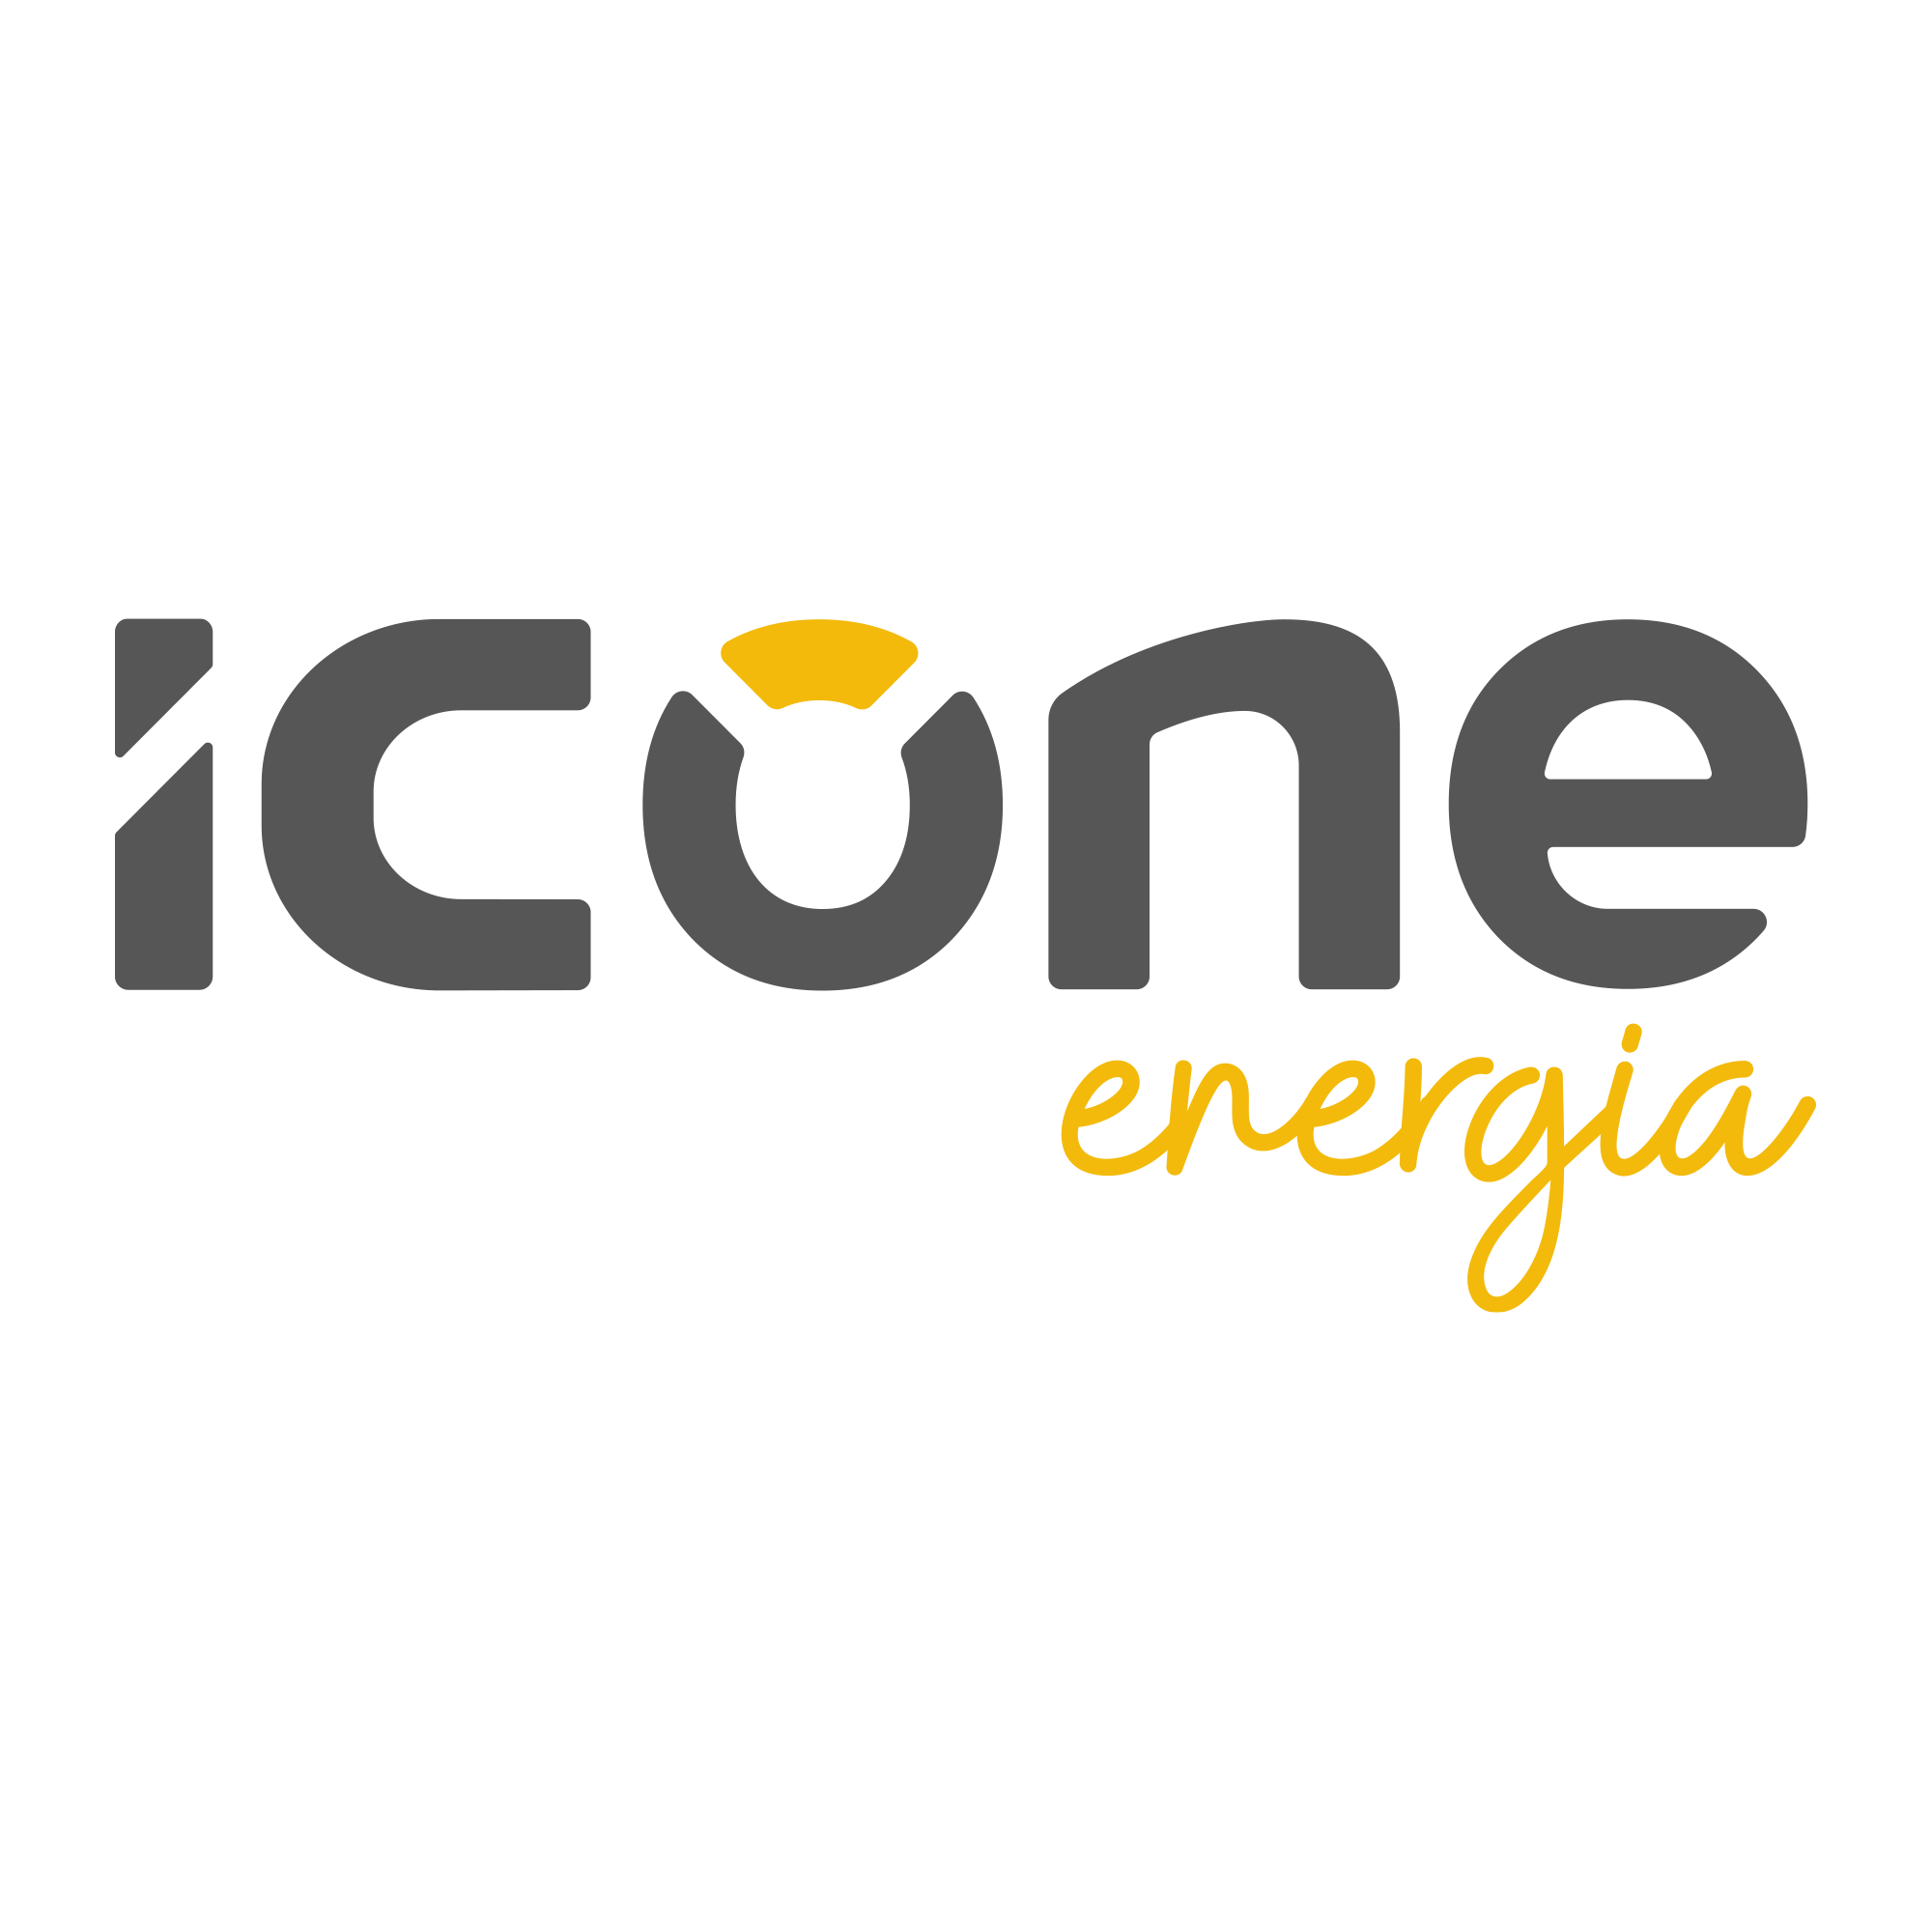 Icone Energia